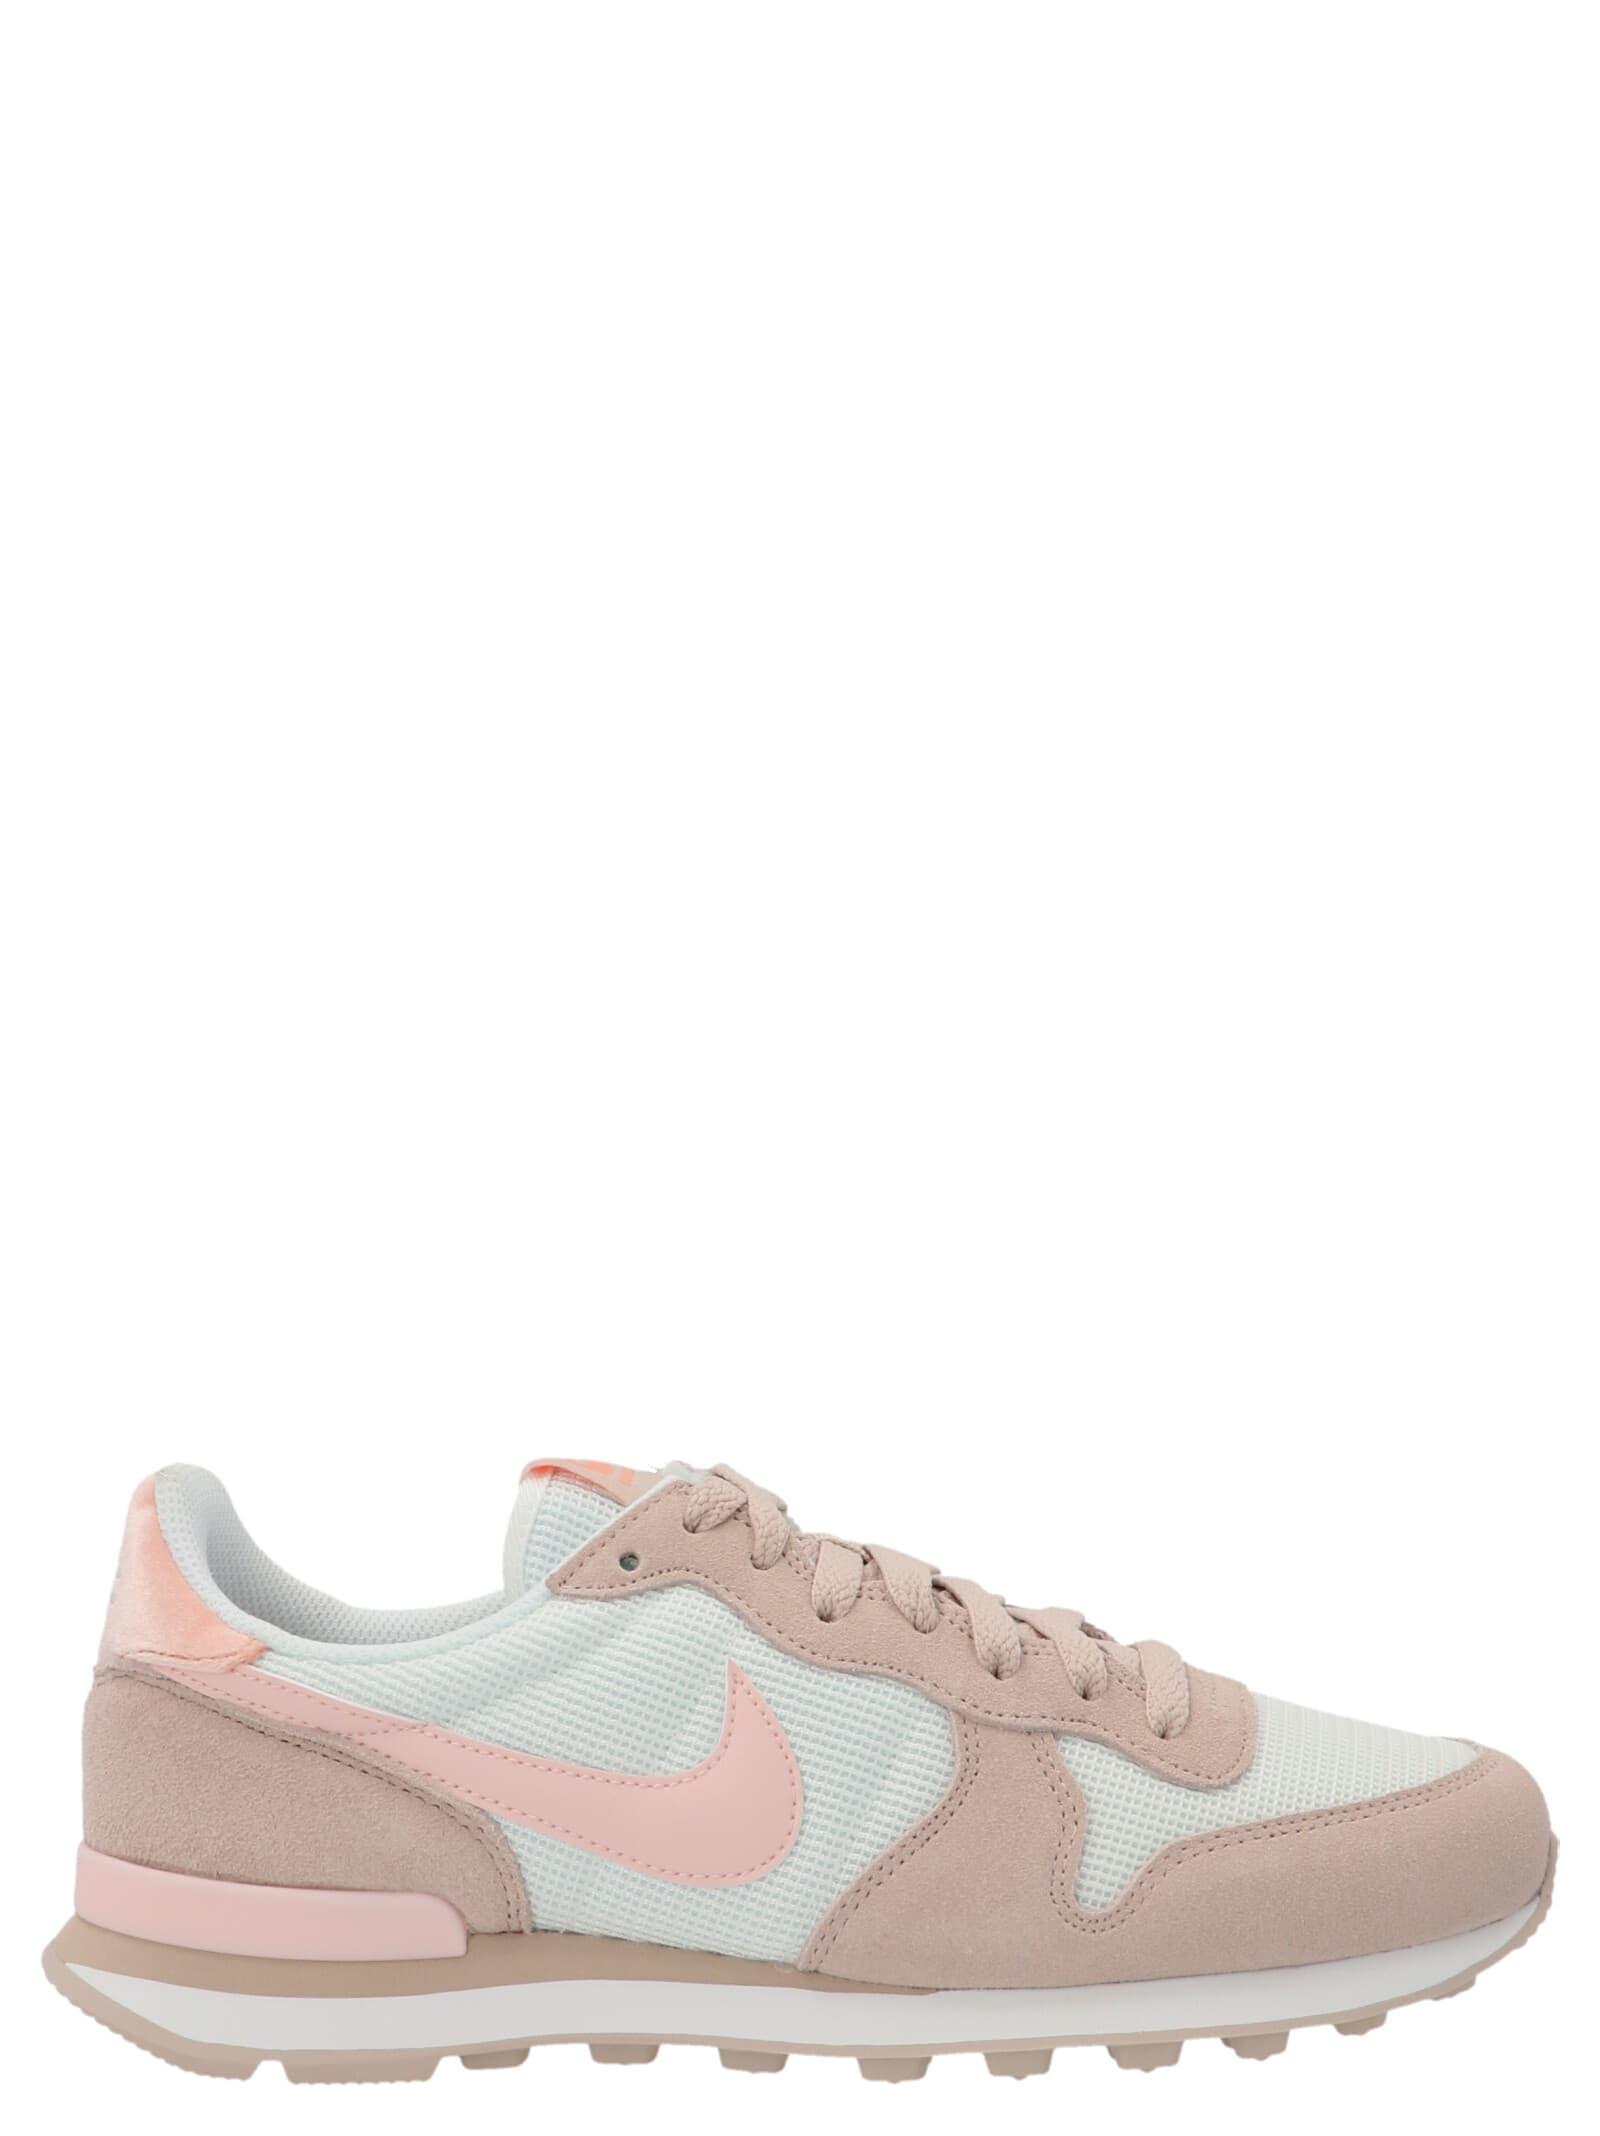 Nike Internationalist Mn Sneakers in Pink | Lyst